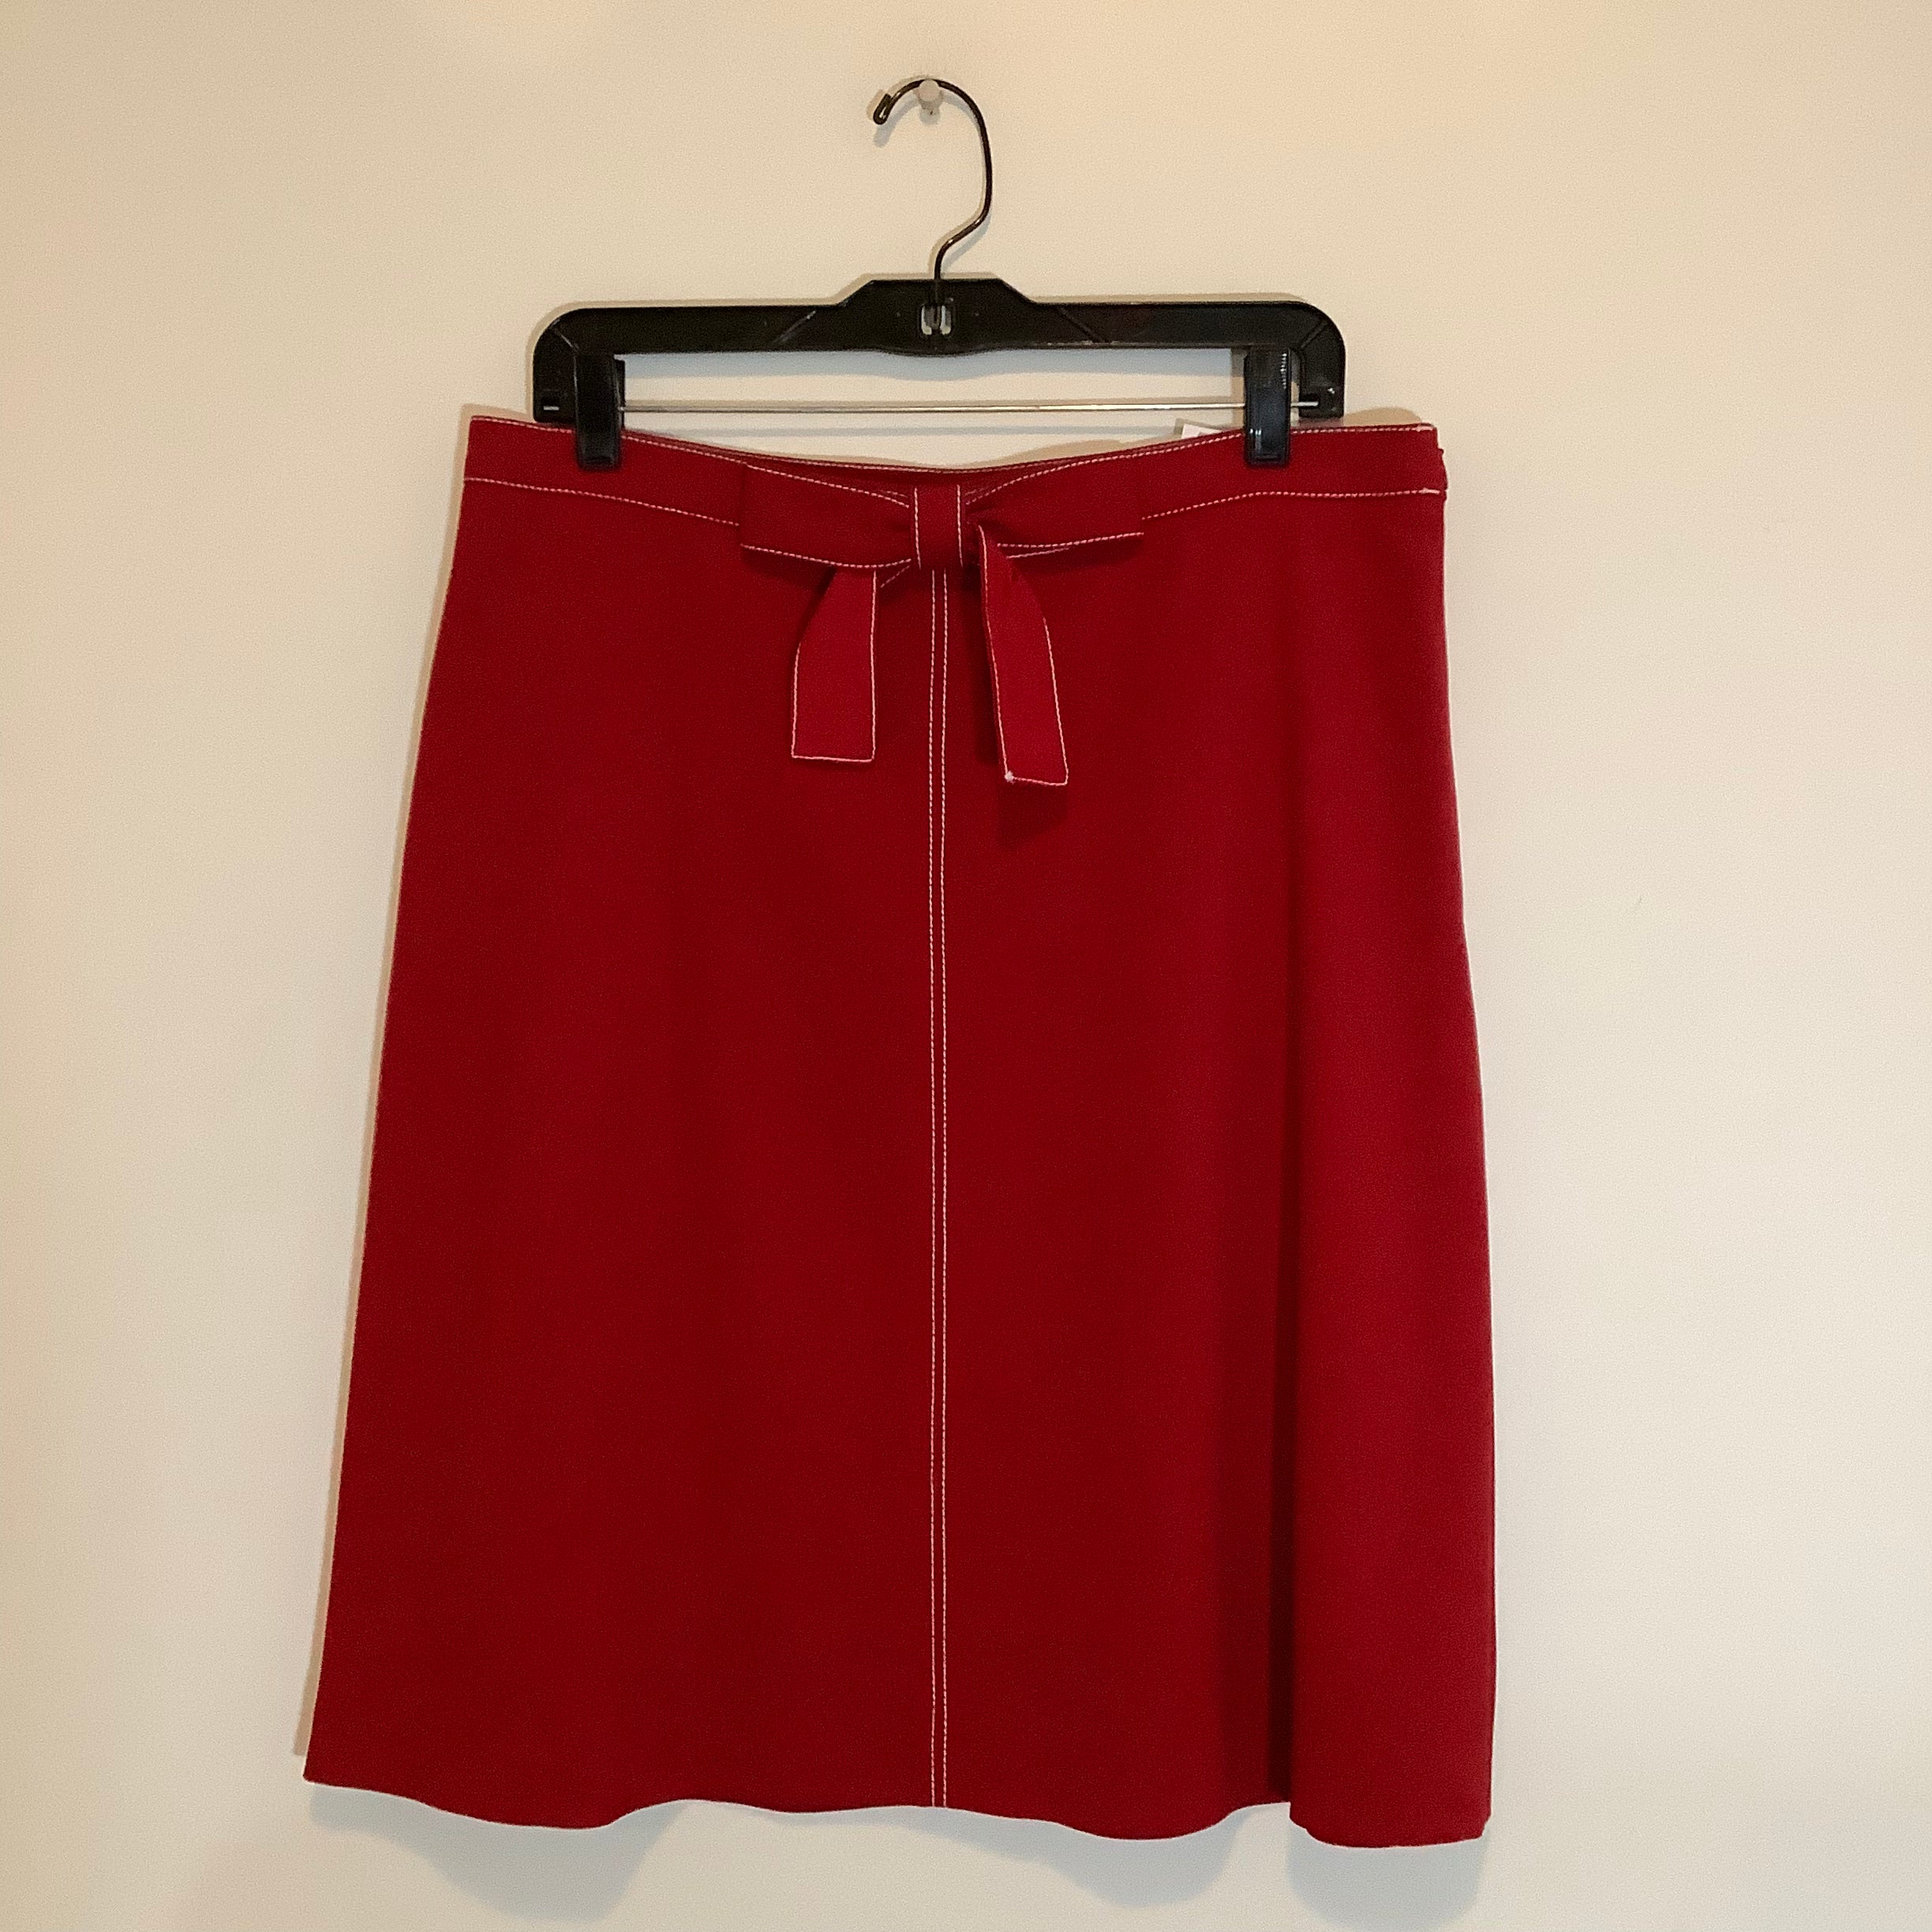 Valentino Red Skirt Size Medium